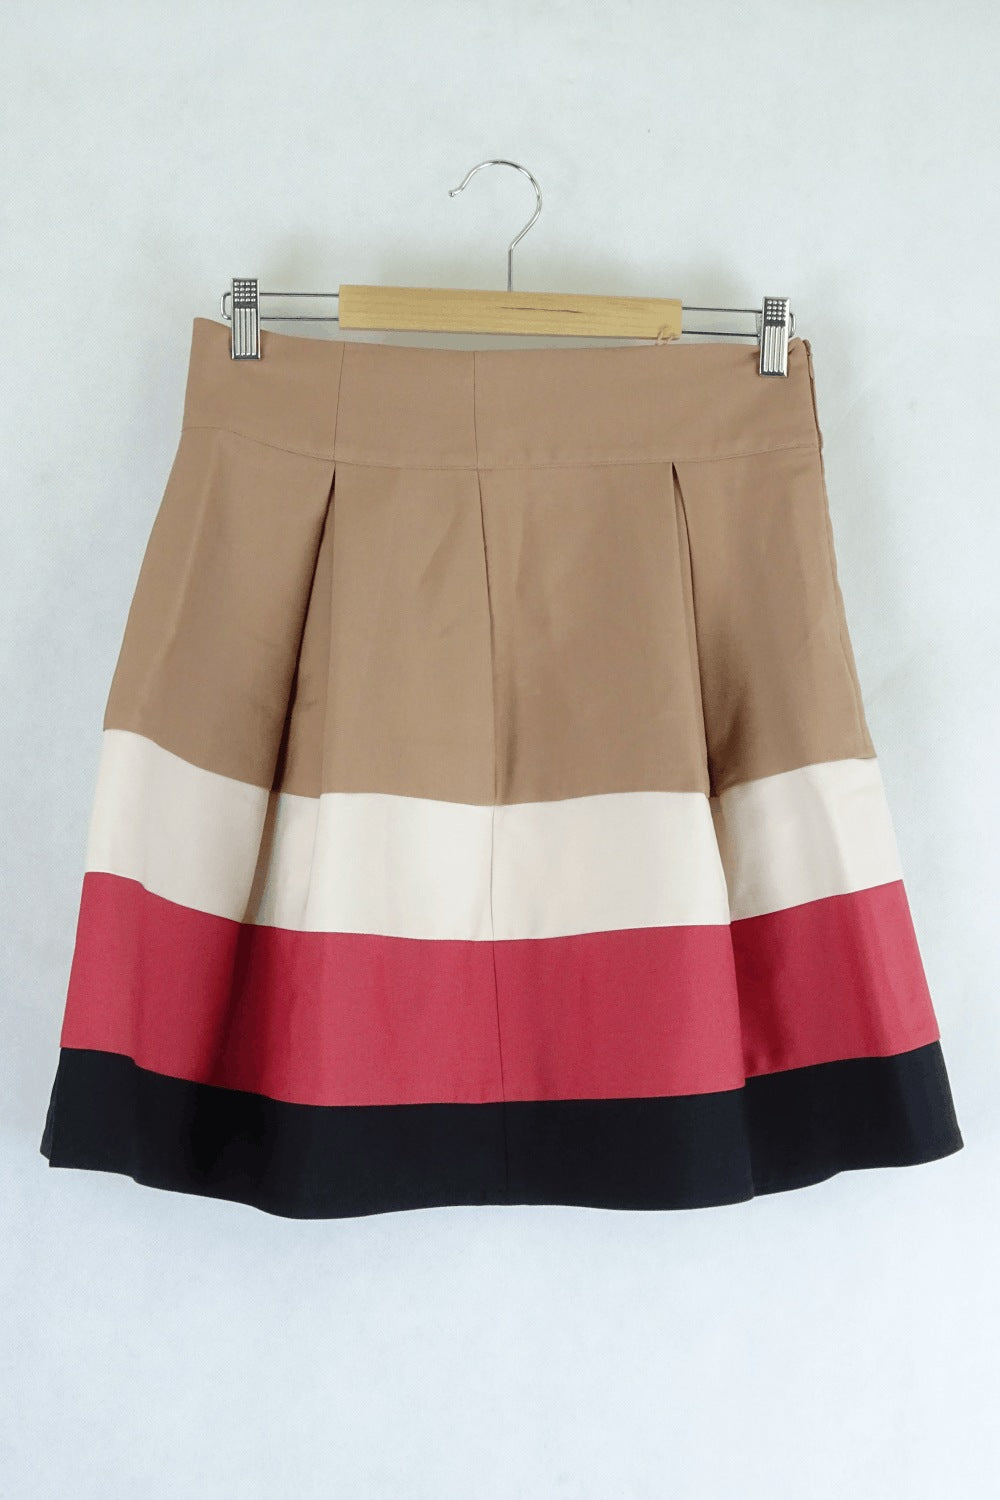 Zara Basics Brown Striped Skirt M